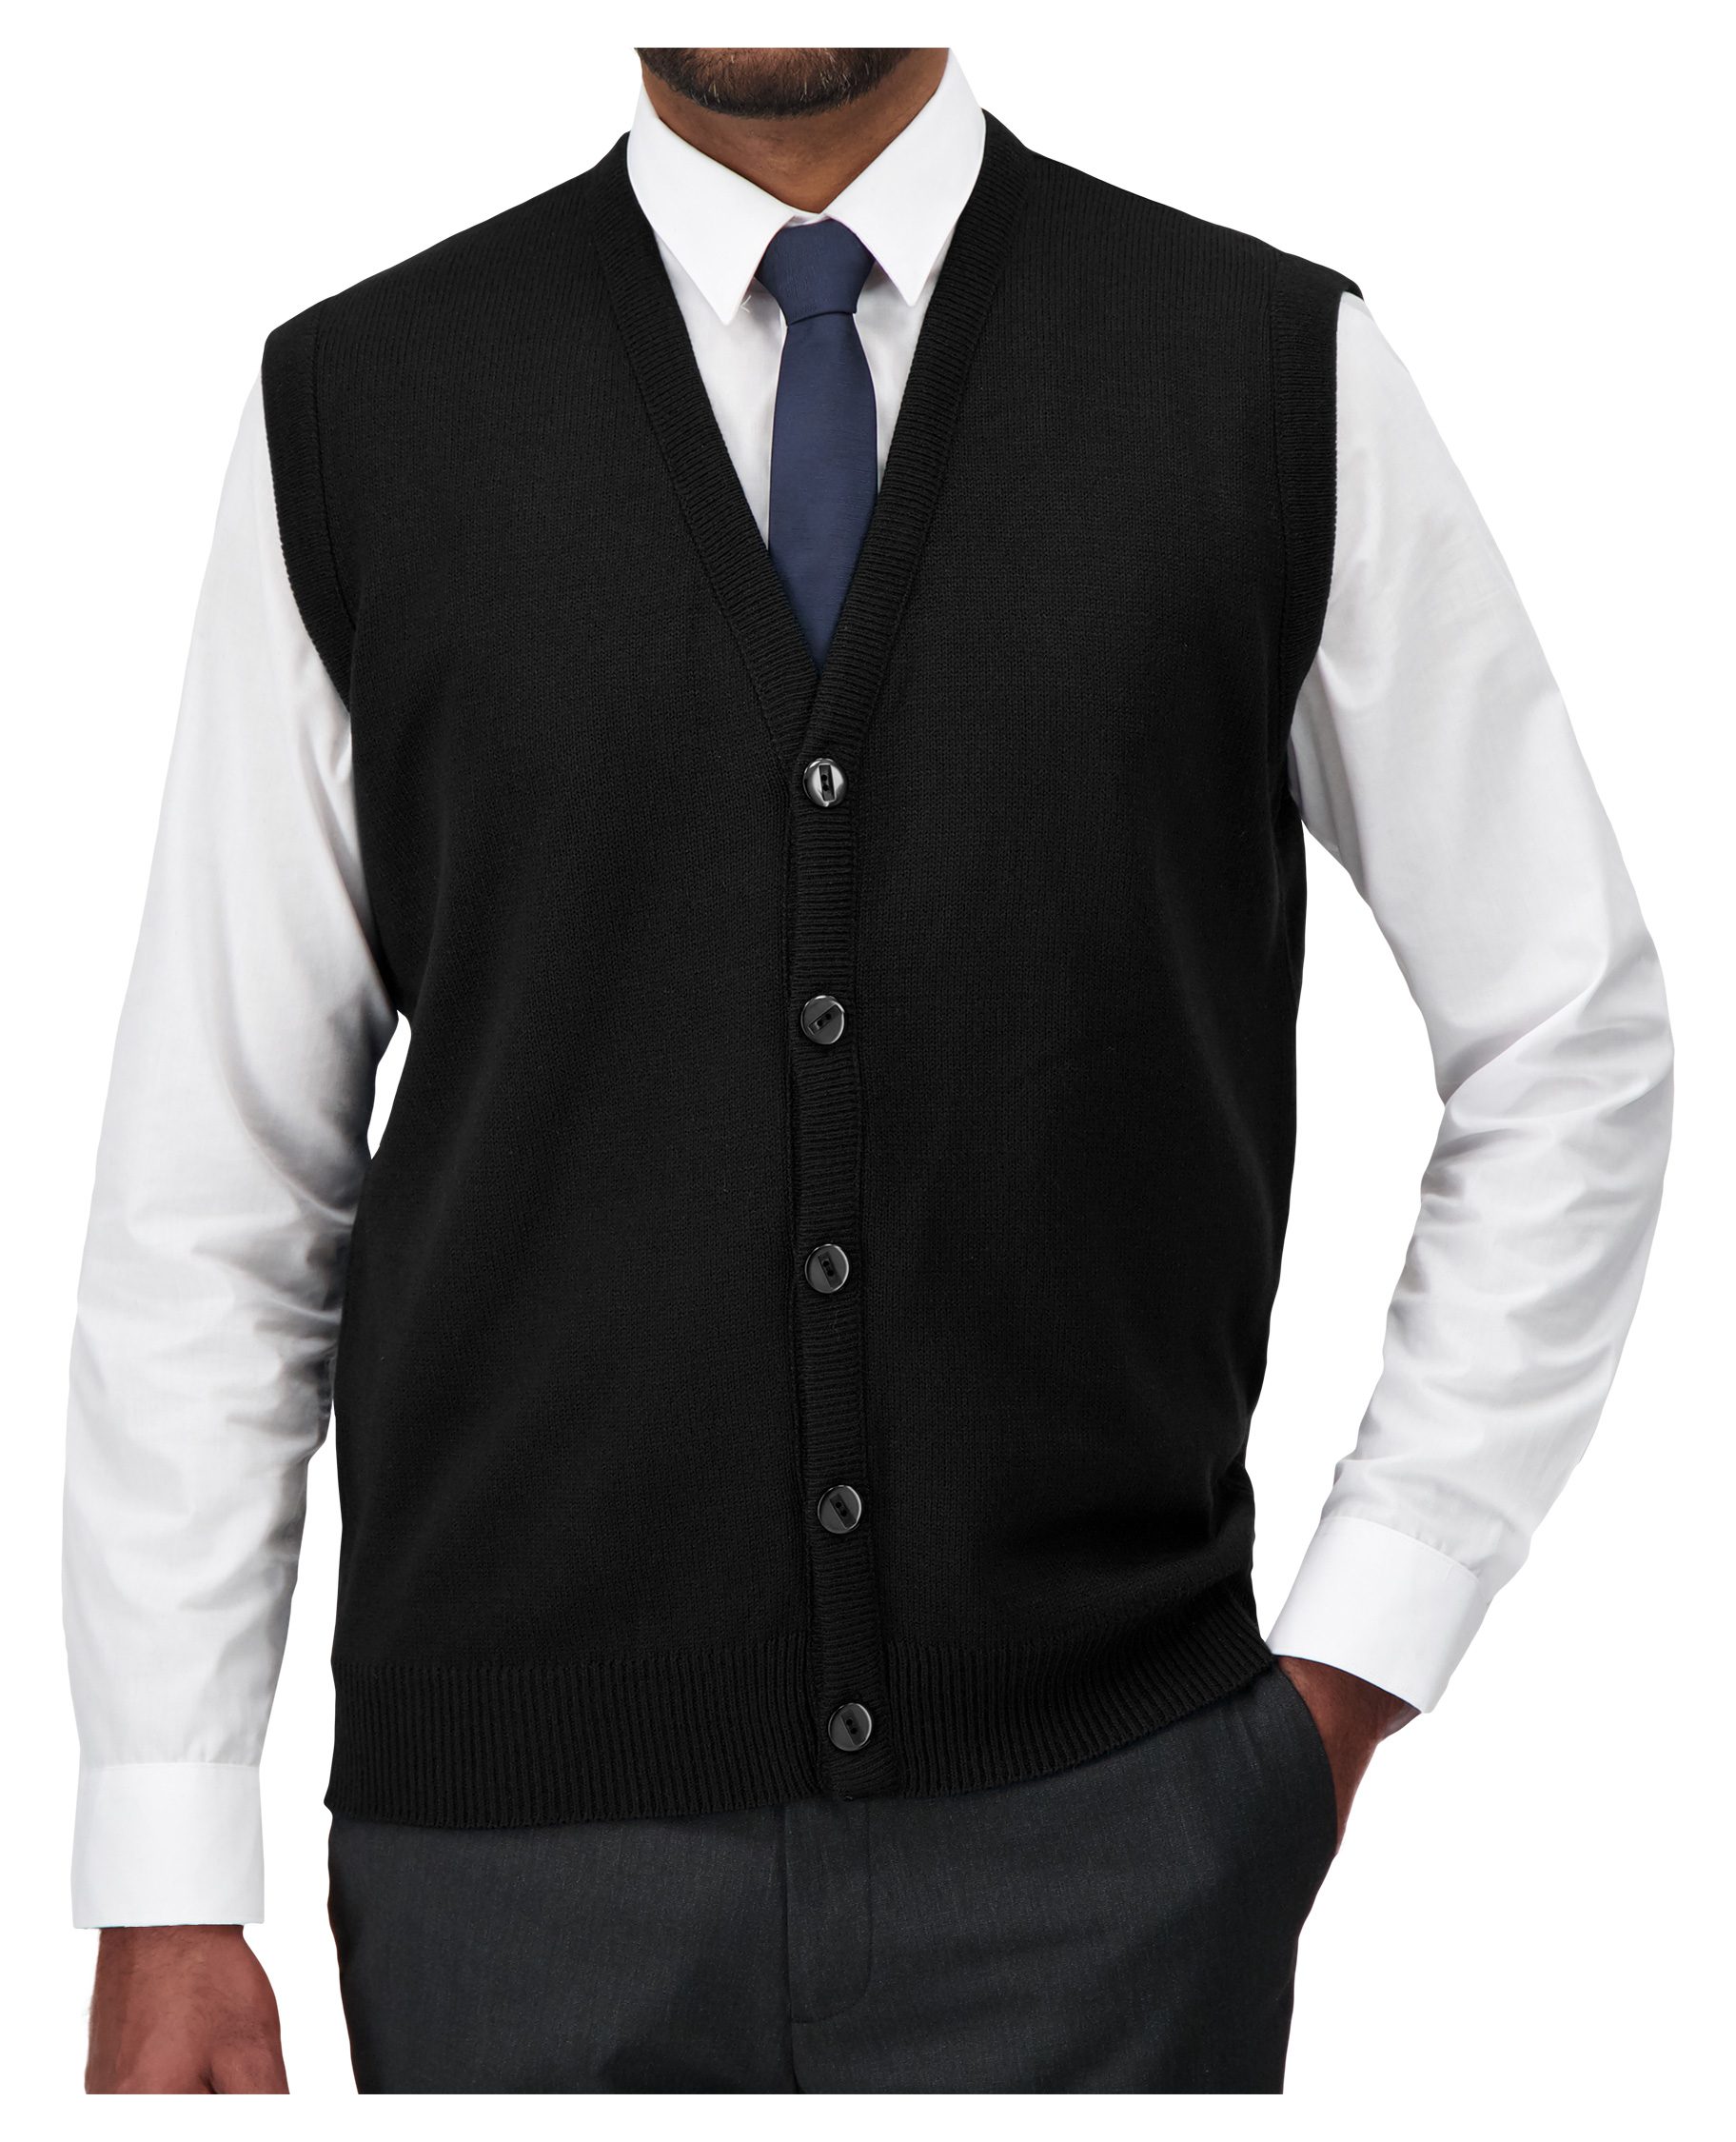 Cobmex V-Neck Button Front Vest #3032 Black